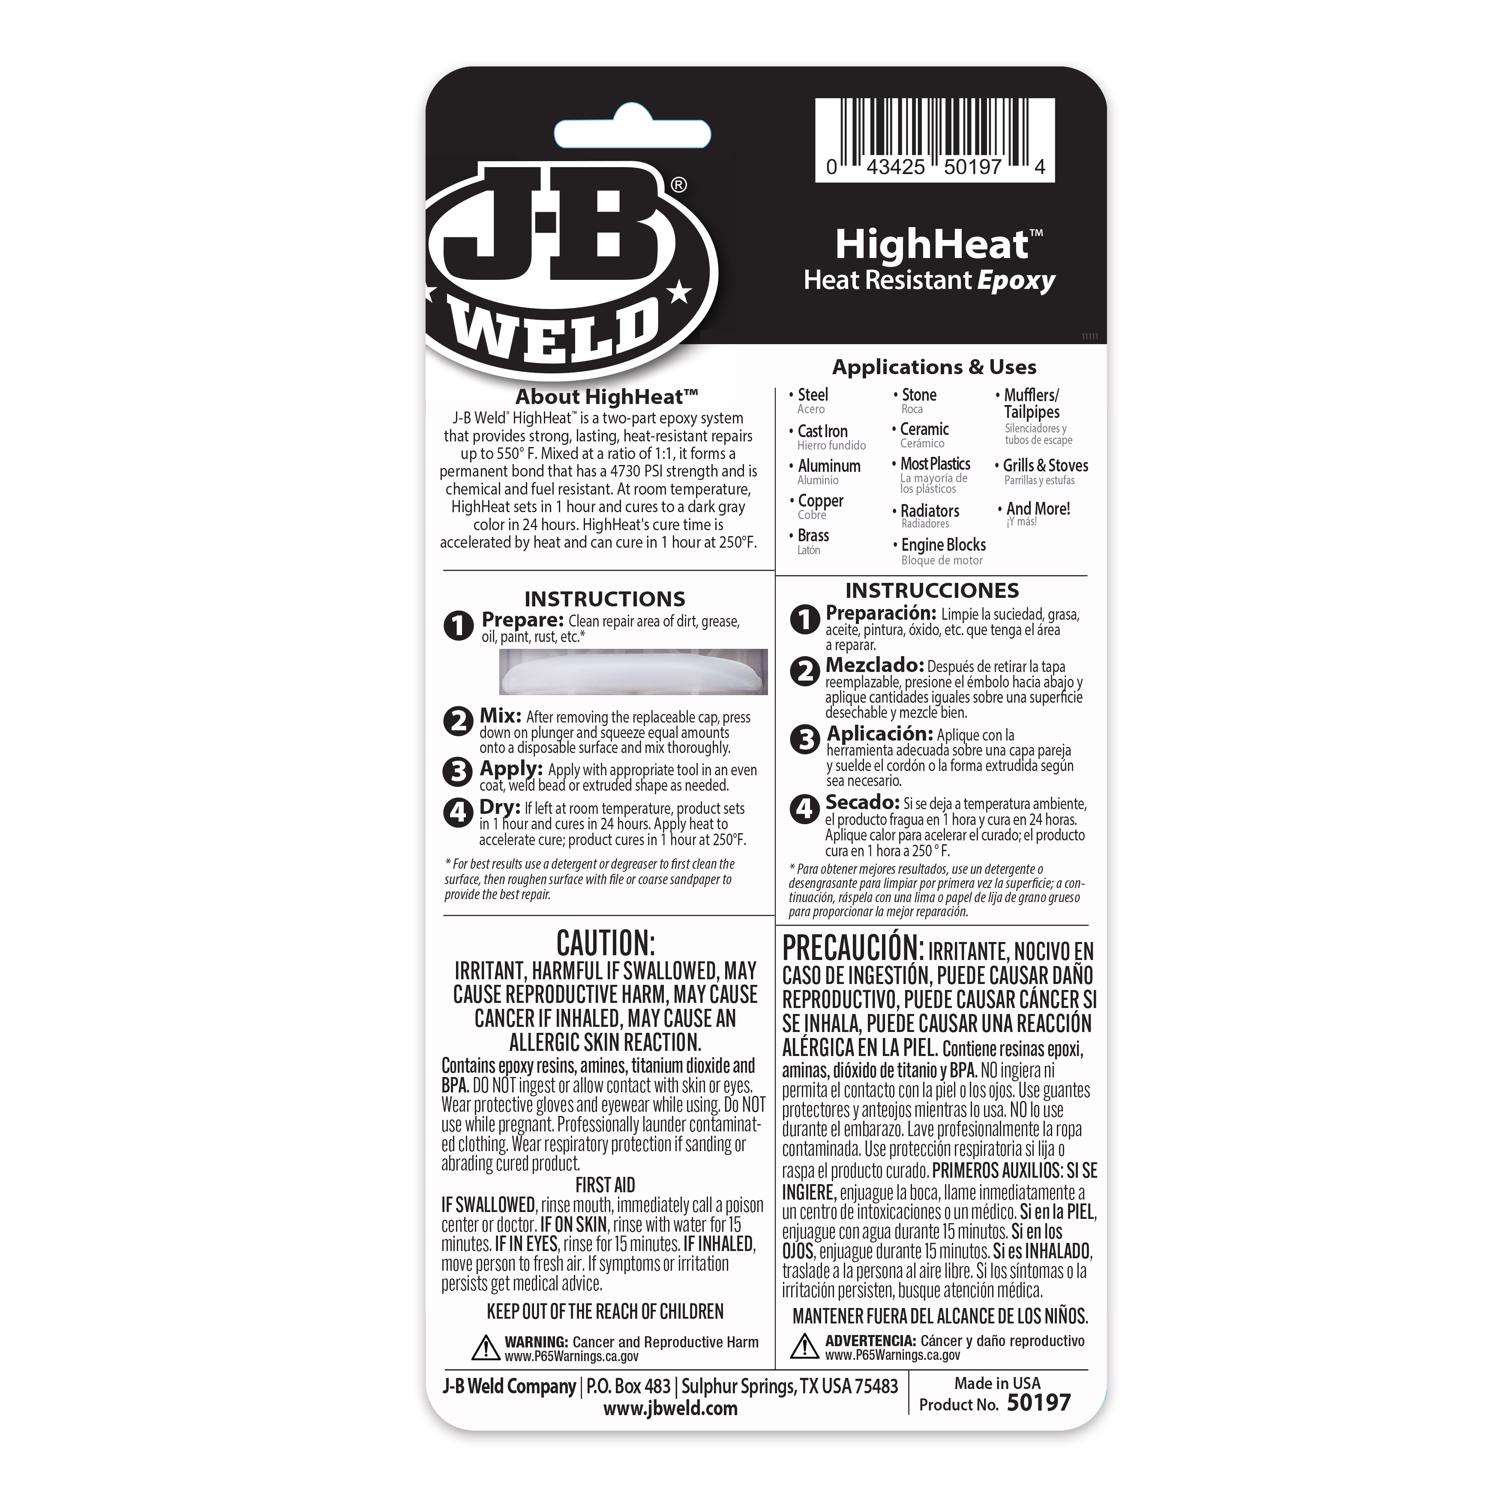 J-B WELDX High Heat Gray Epoxy Putty Stick - Temperature Resistant